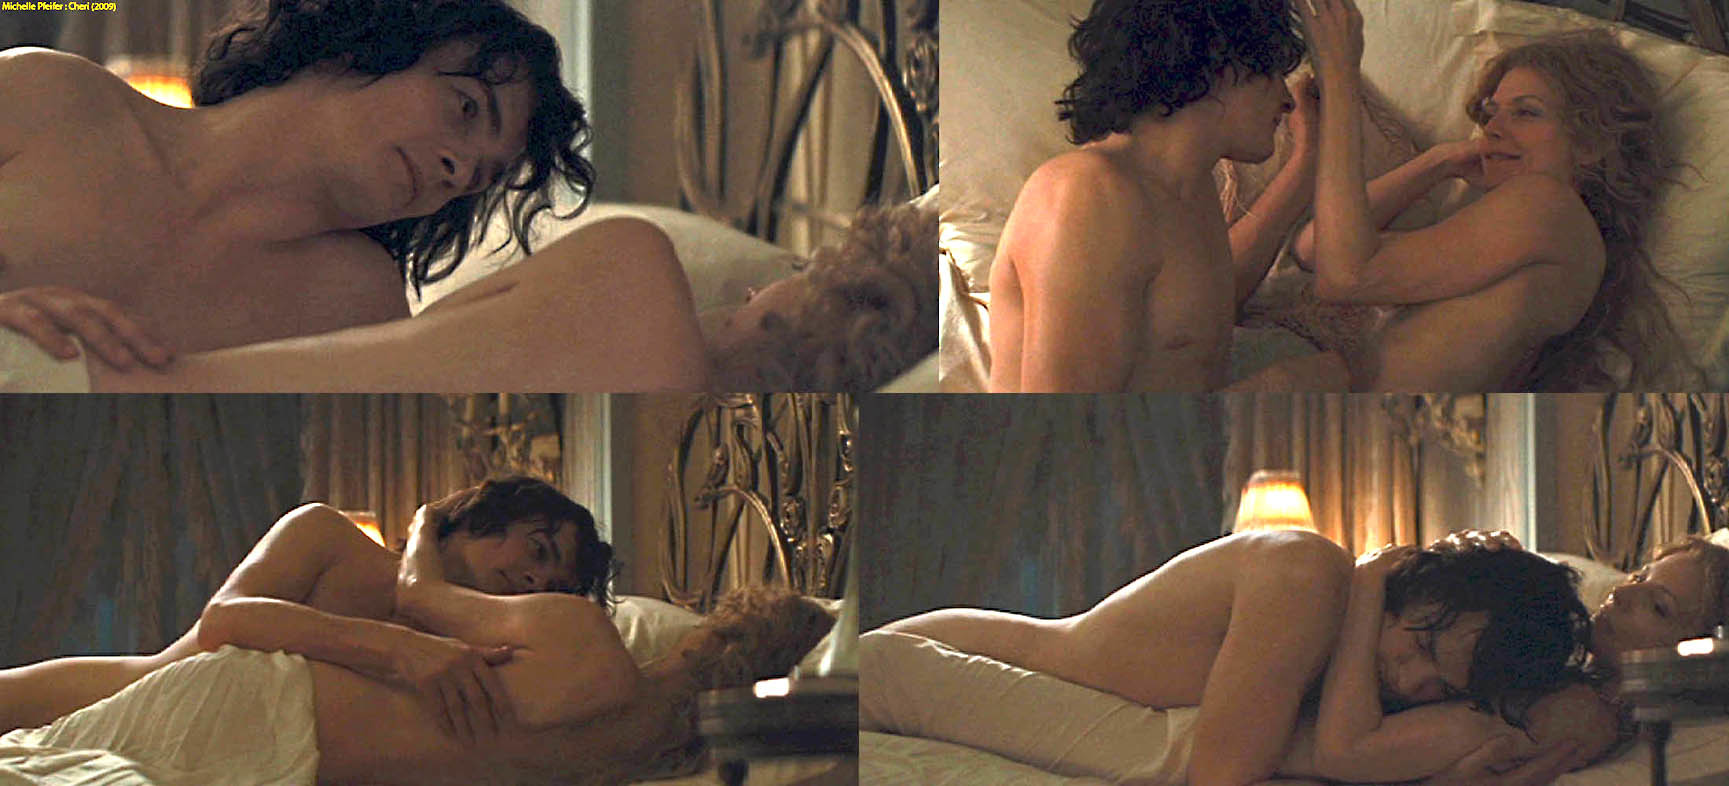 Michelle pfeiffer nudes